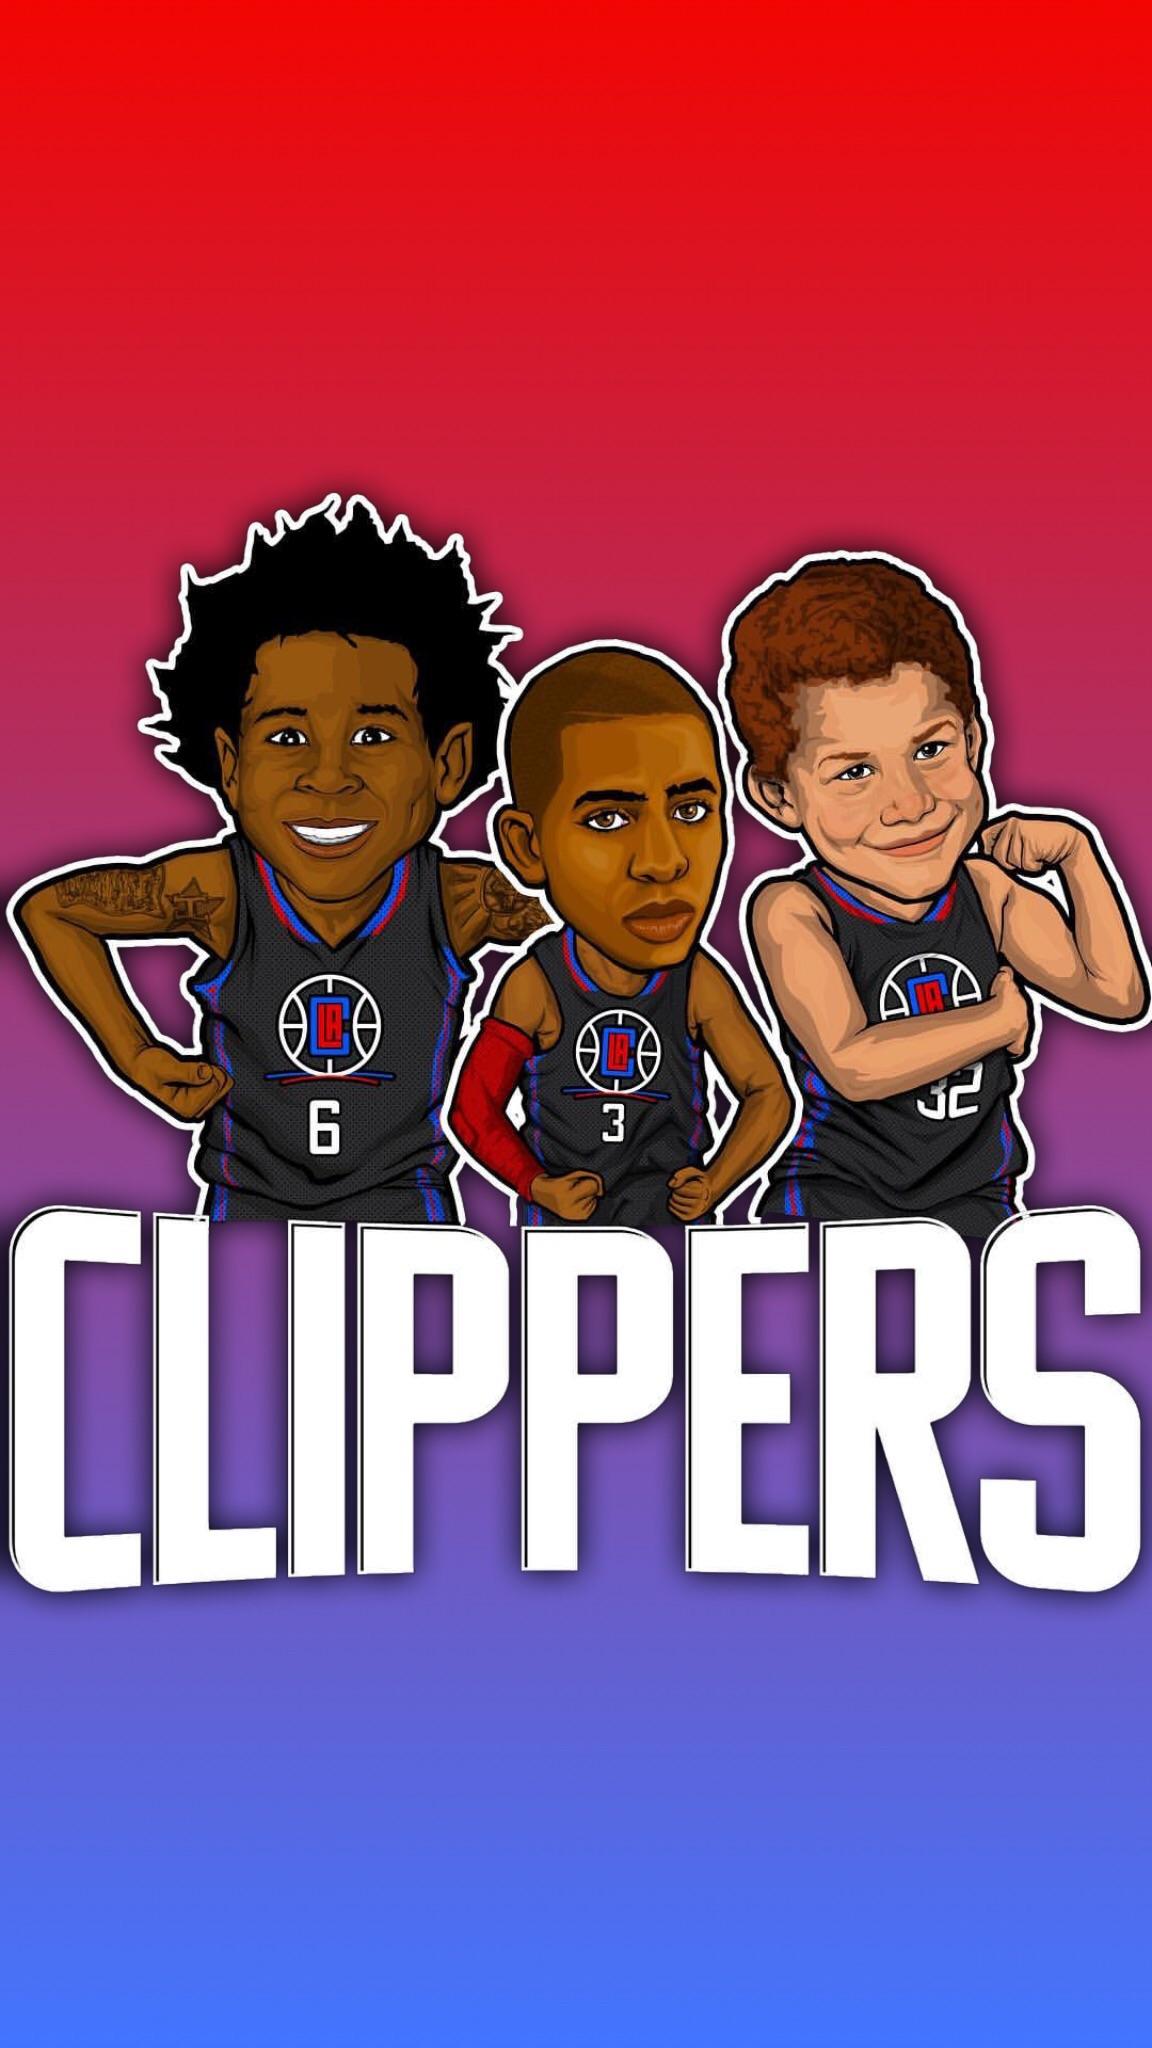 Clippers Wallpaper I Made - La Clippers Logo 2018 , HD Wallpaper & Backgrounds